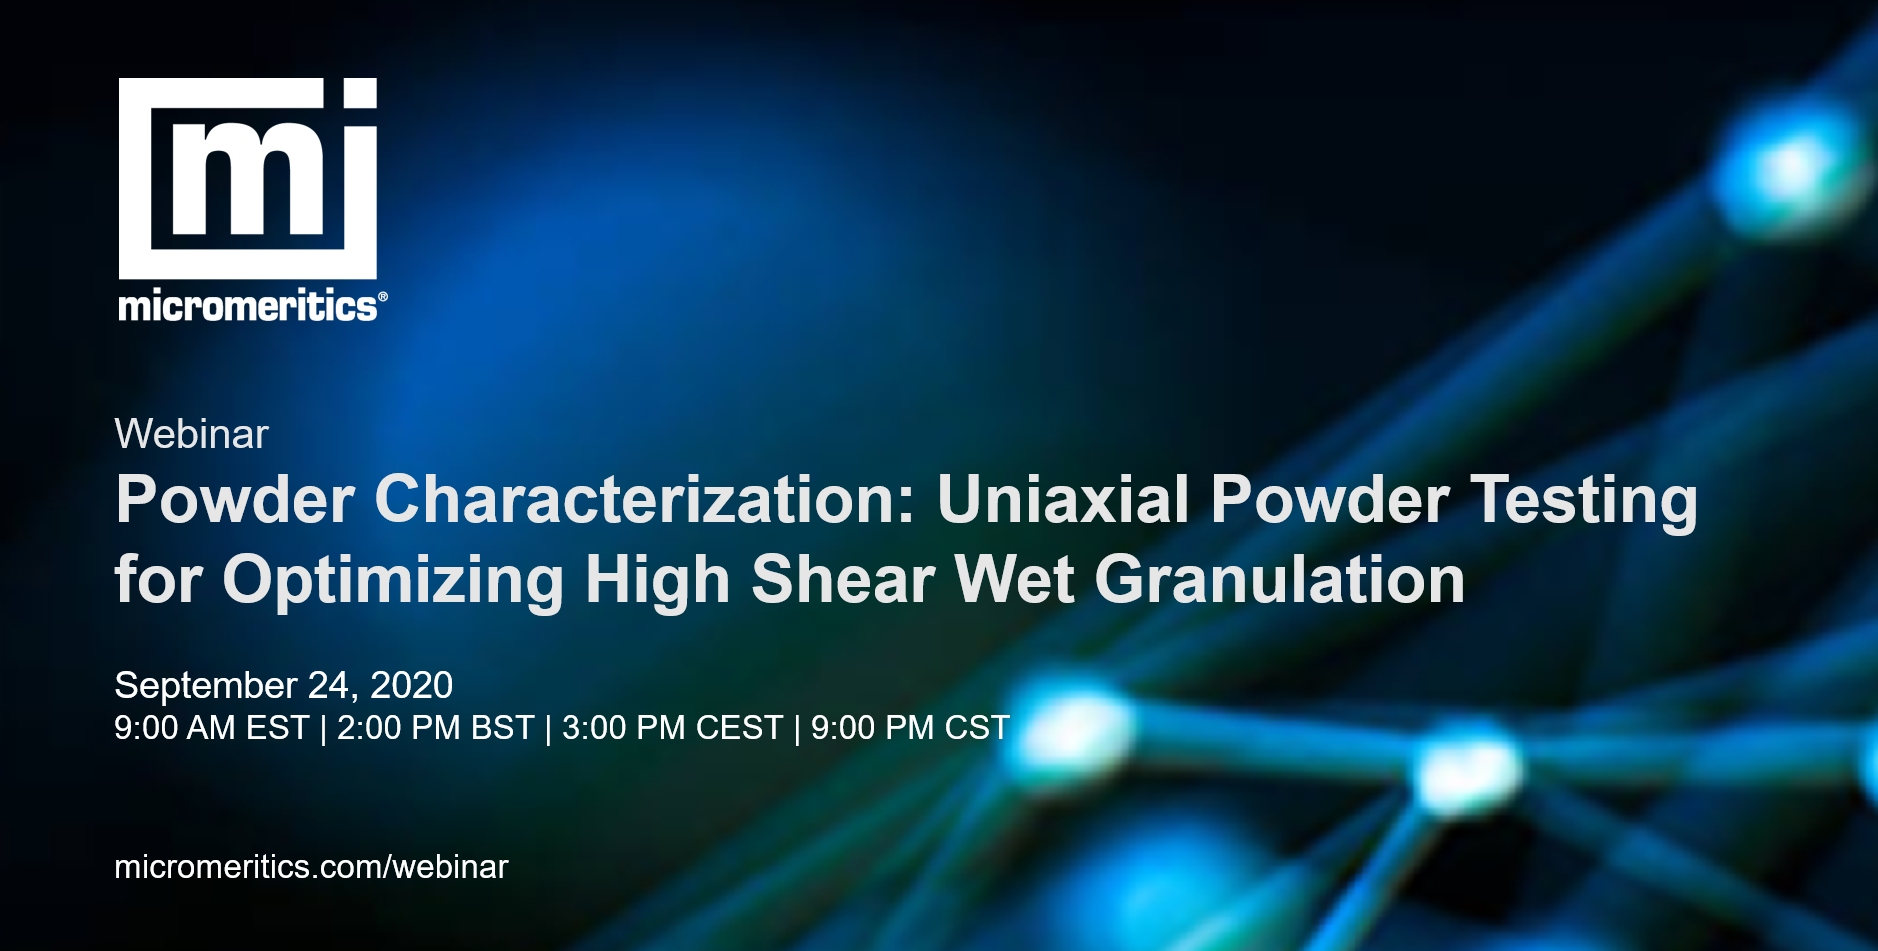 Uniaxial powder testing for optimizing high shear wet granulation